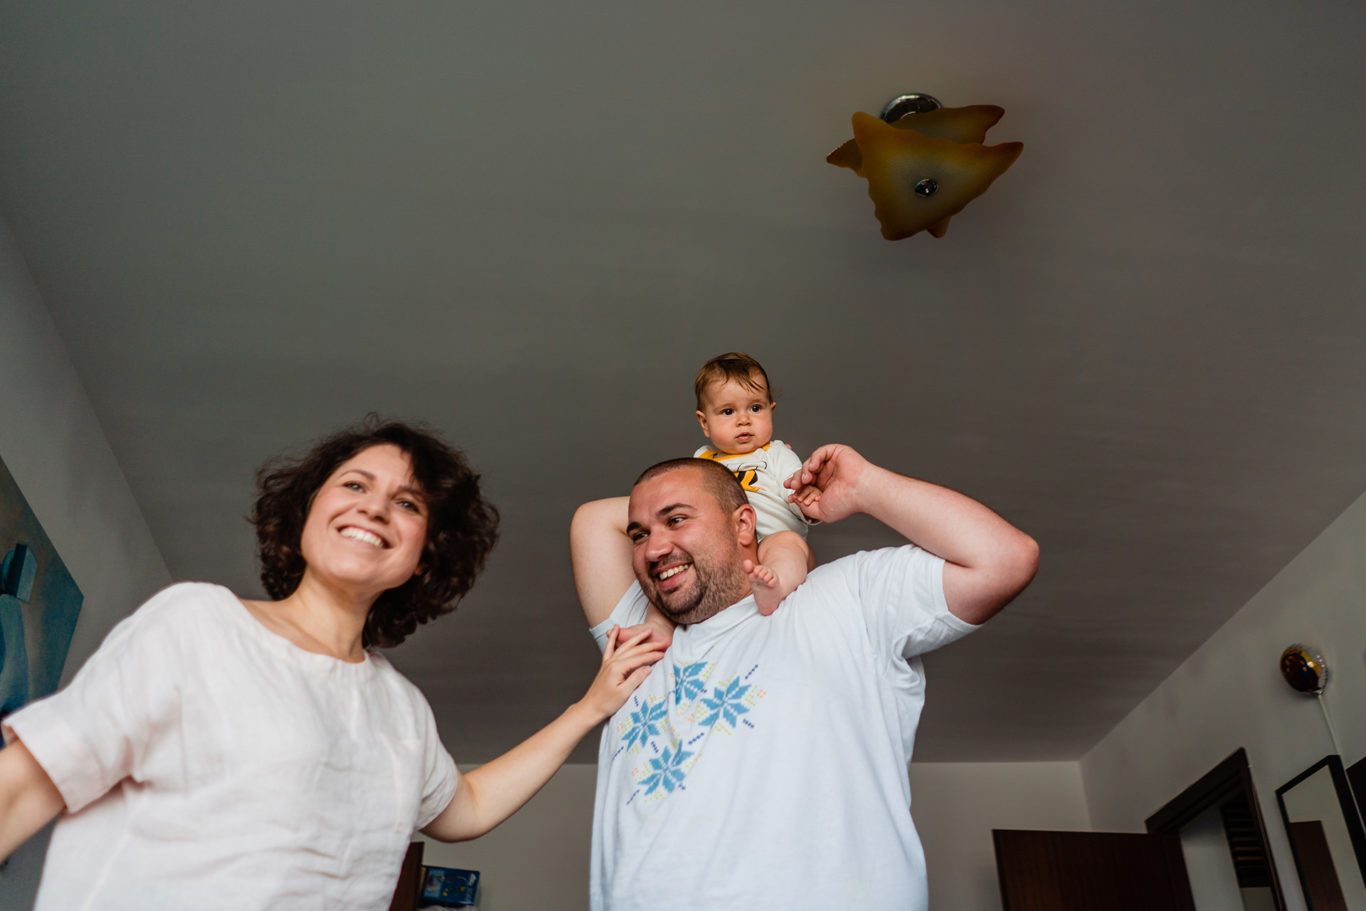 Fotografii de familie in culori de toamna - fotograf de familie - Ciprian Dumitrescu - fotograf Bucuresti - fotografie copii